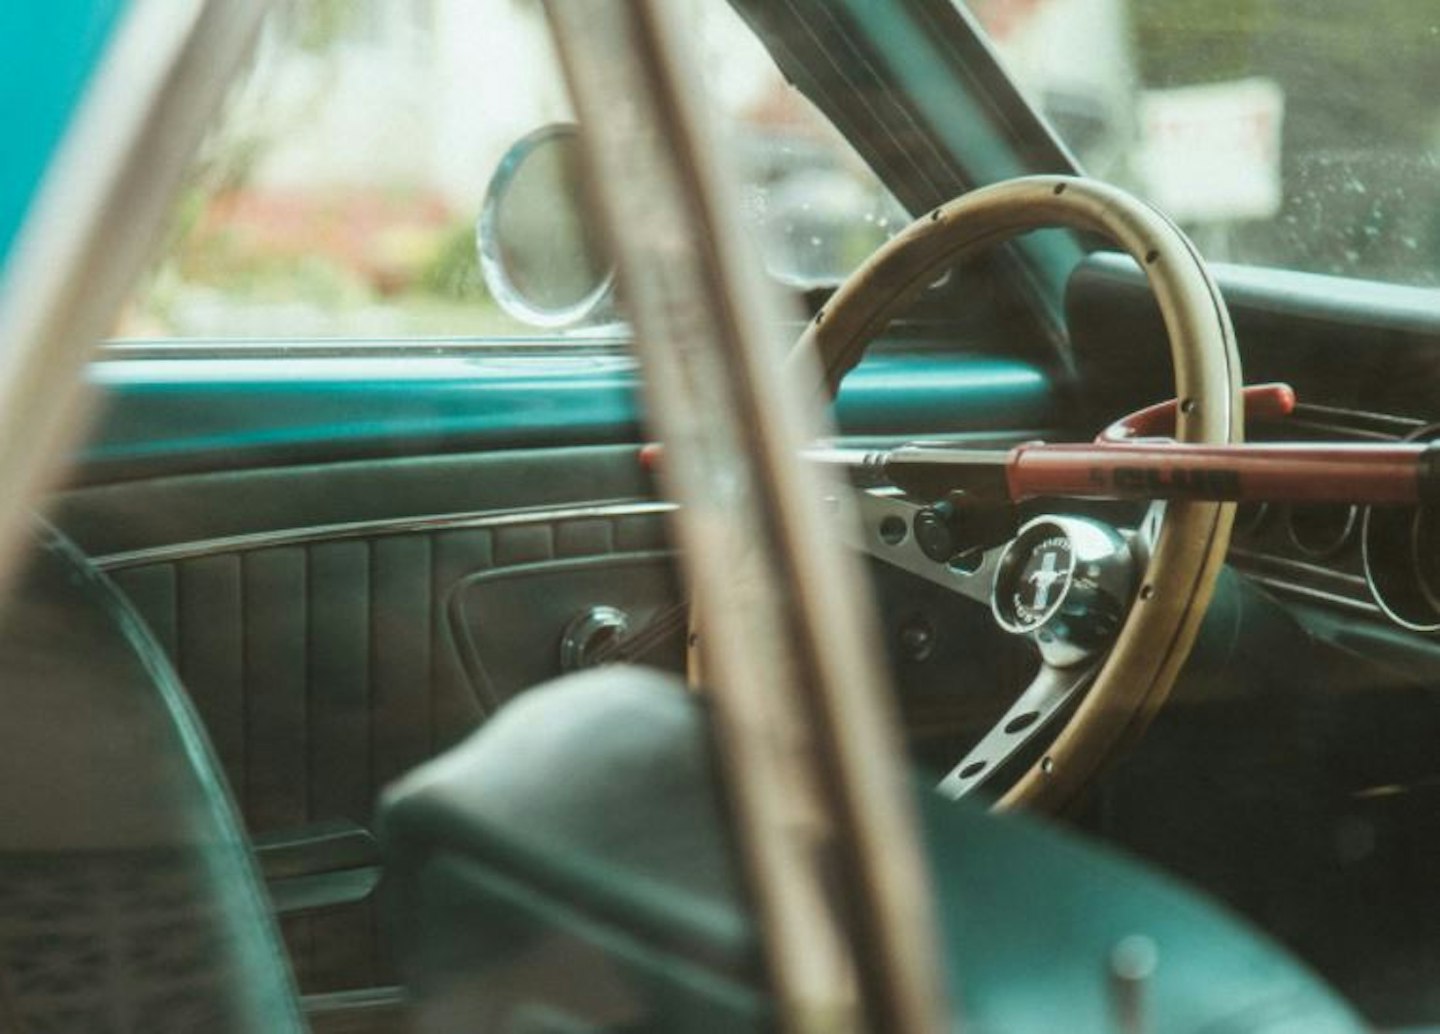 Universal Heavy Duty Steering Wheel Lock: Enhance Your Car's Security &  Deter Theft!